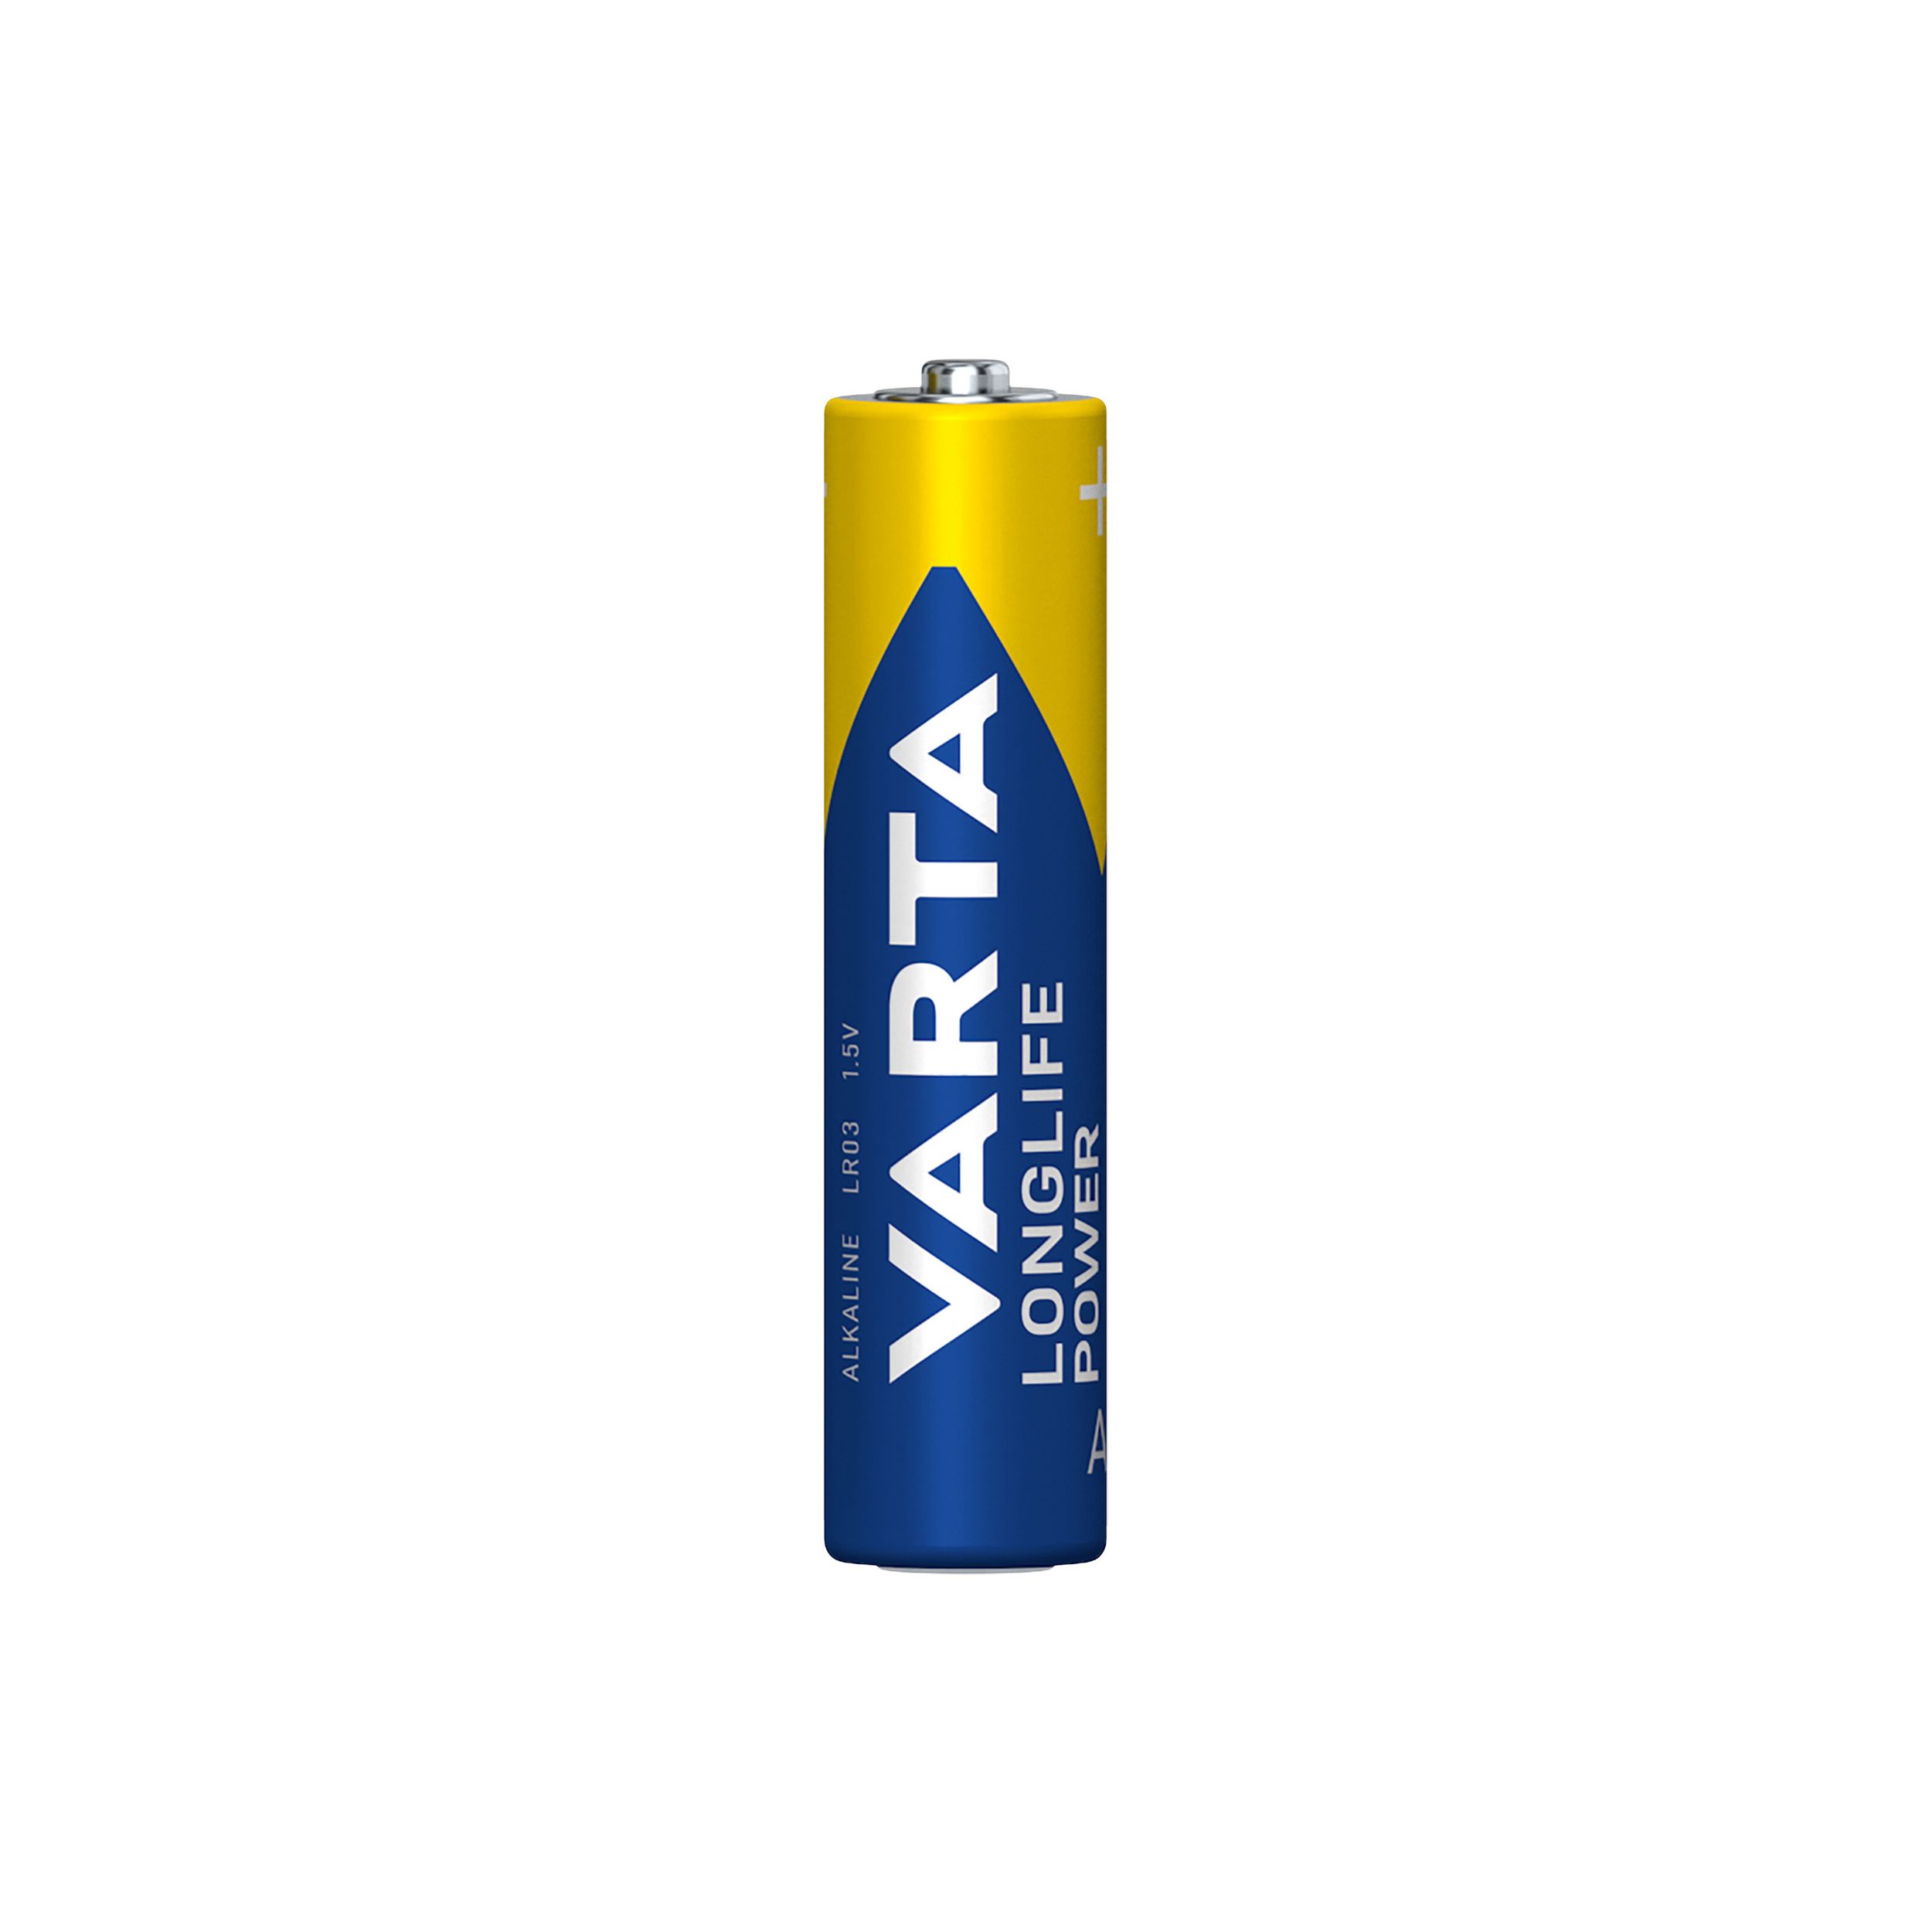 Varta Longlife Power 1.5V AAA Battery, Pack of 24